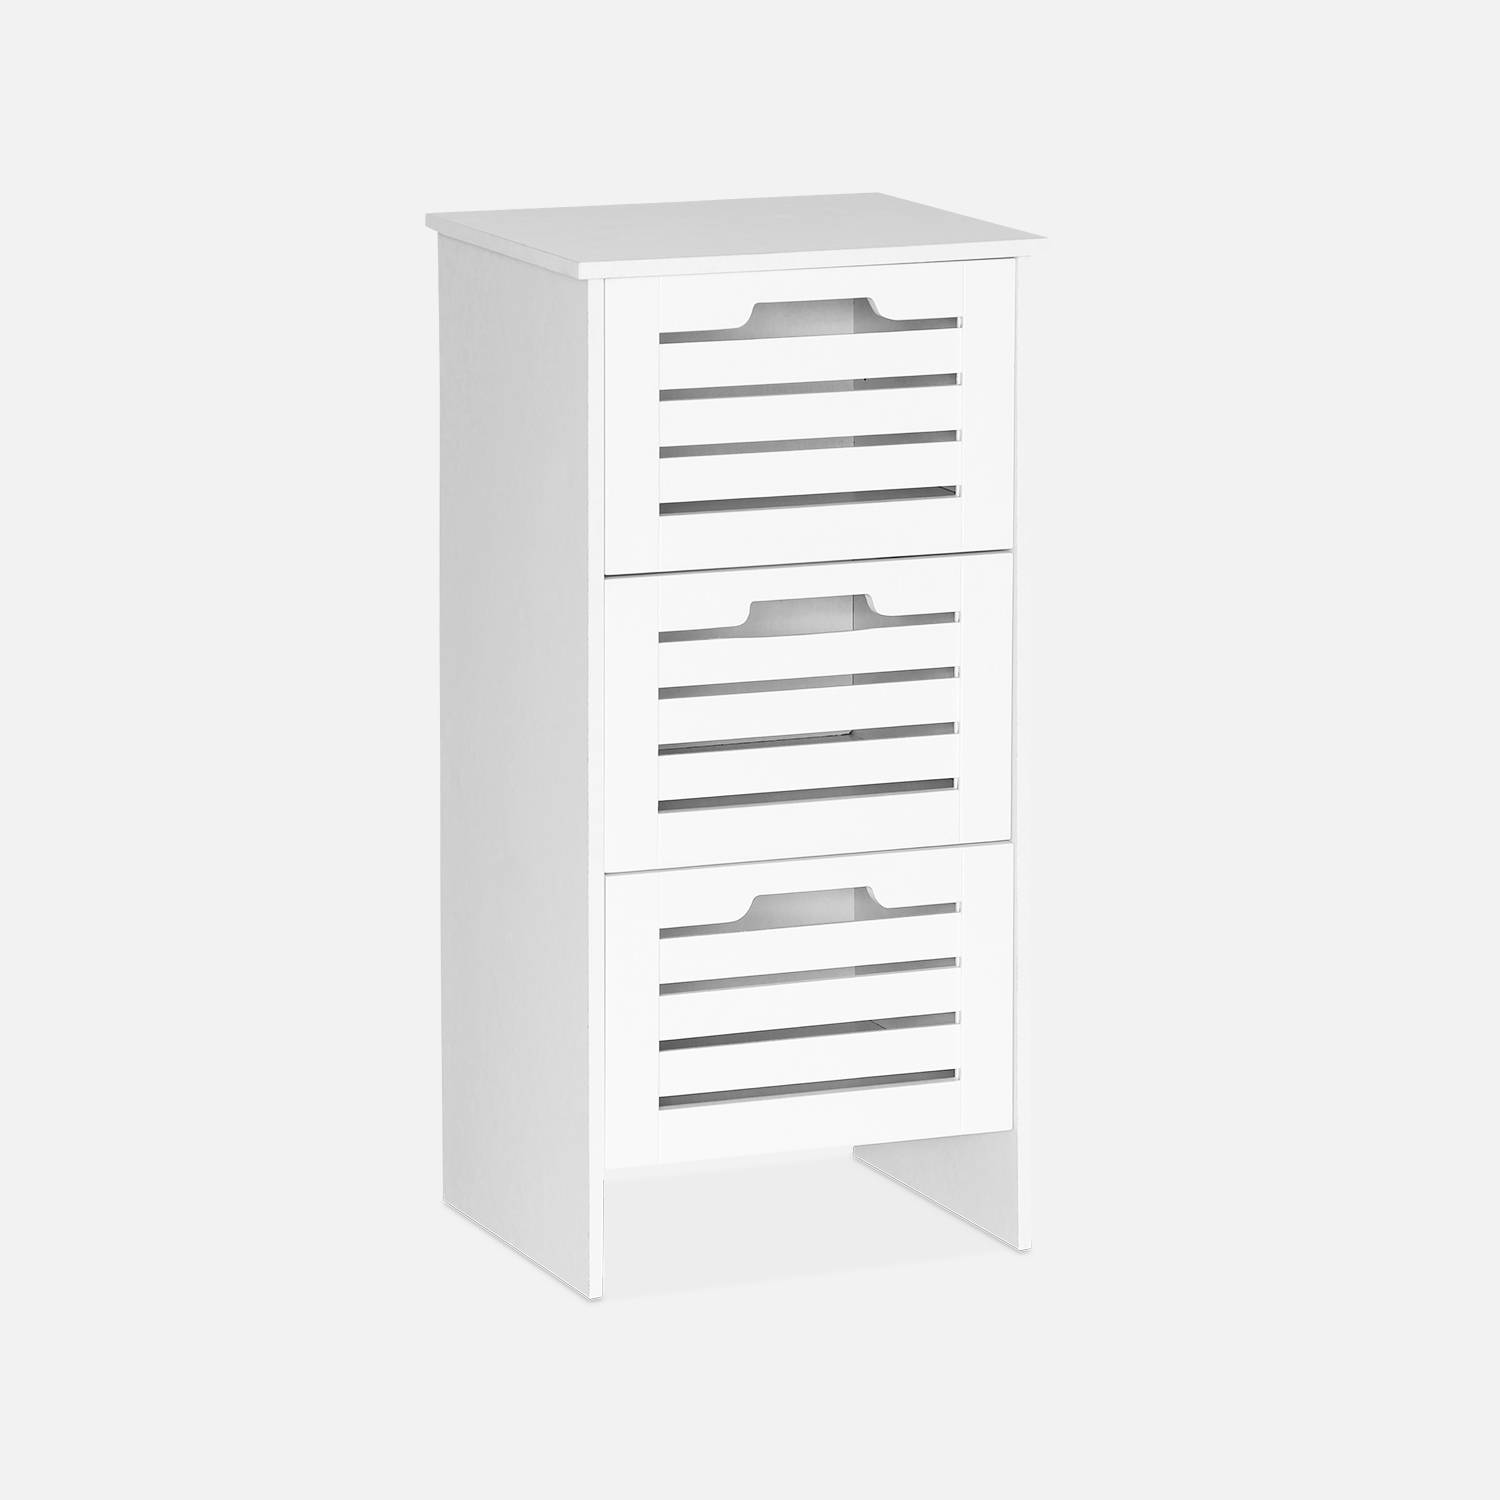 Mueble de almacenaje - Rivage - 3 cajones - Blanco ,sweeek,Photo1